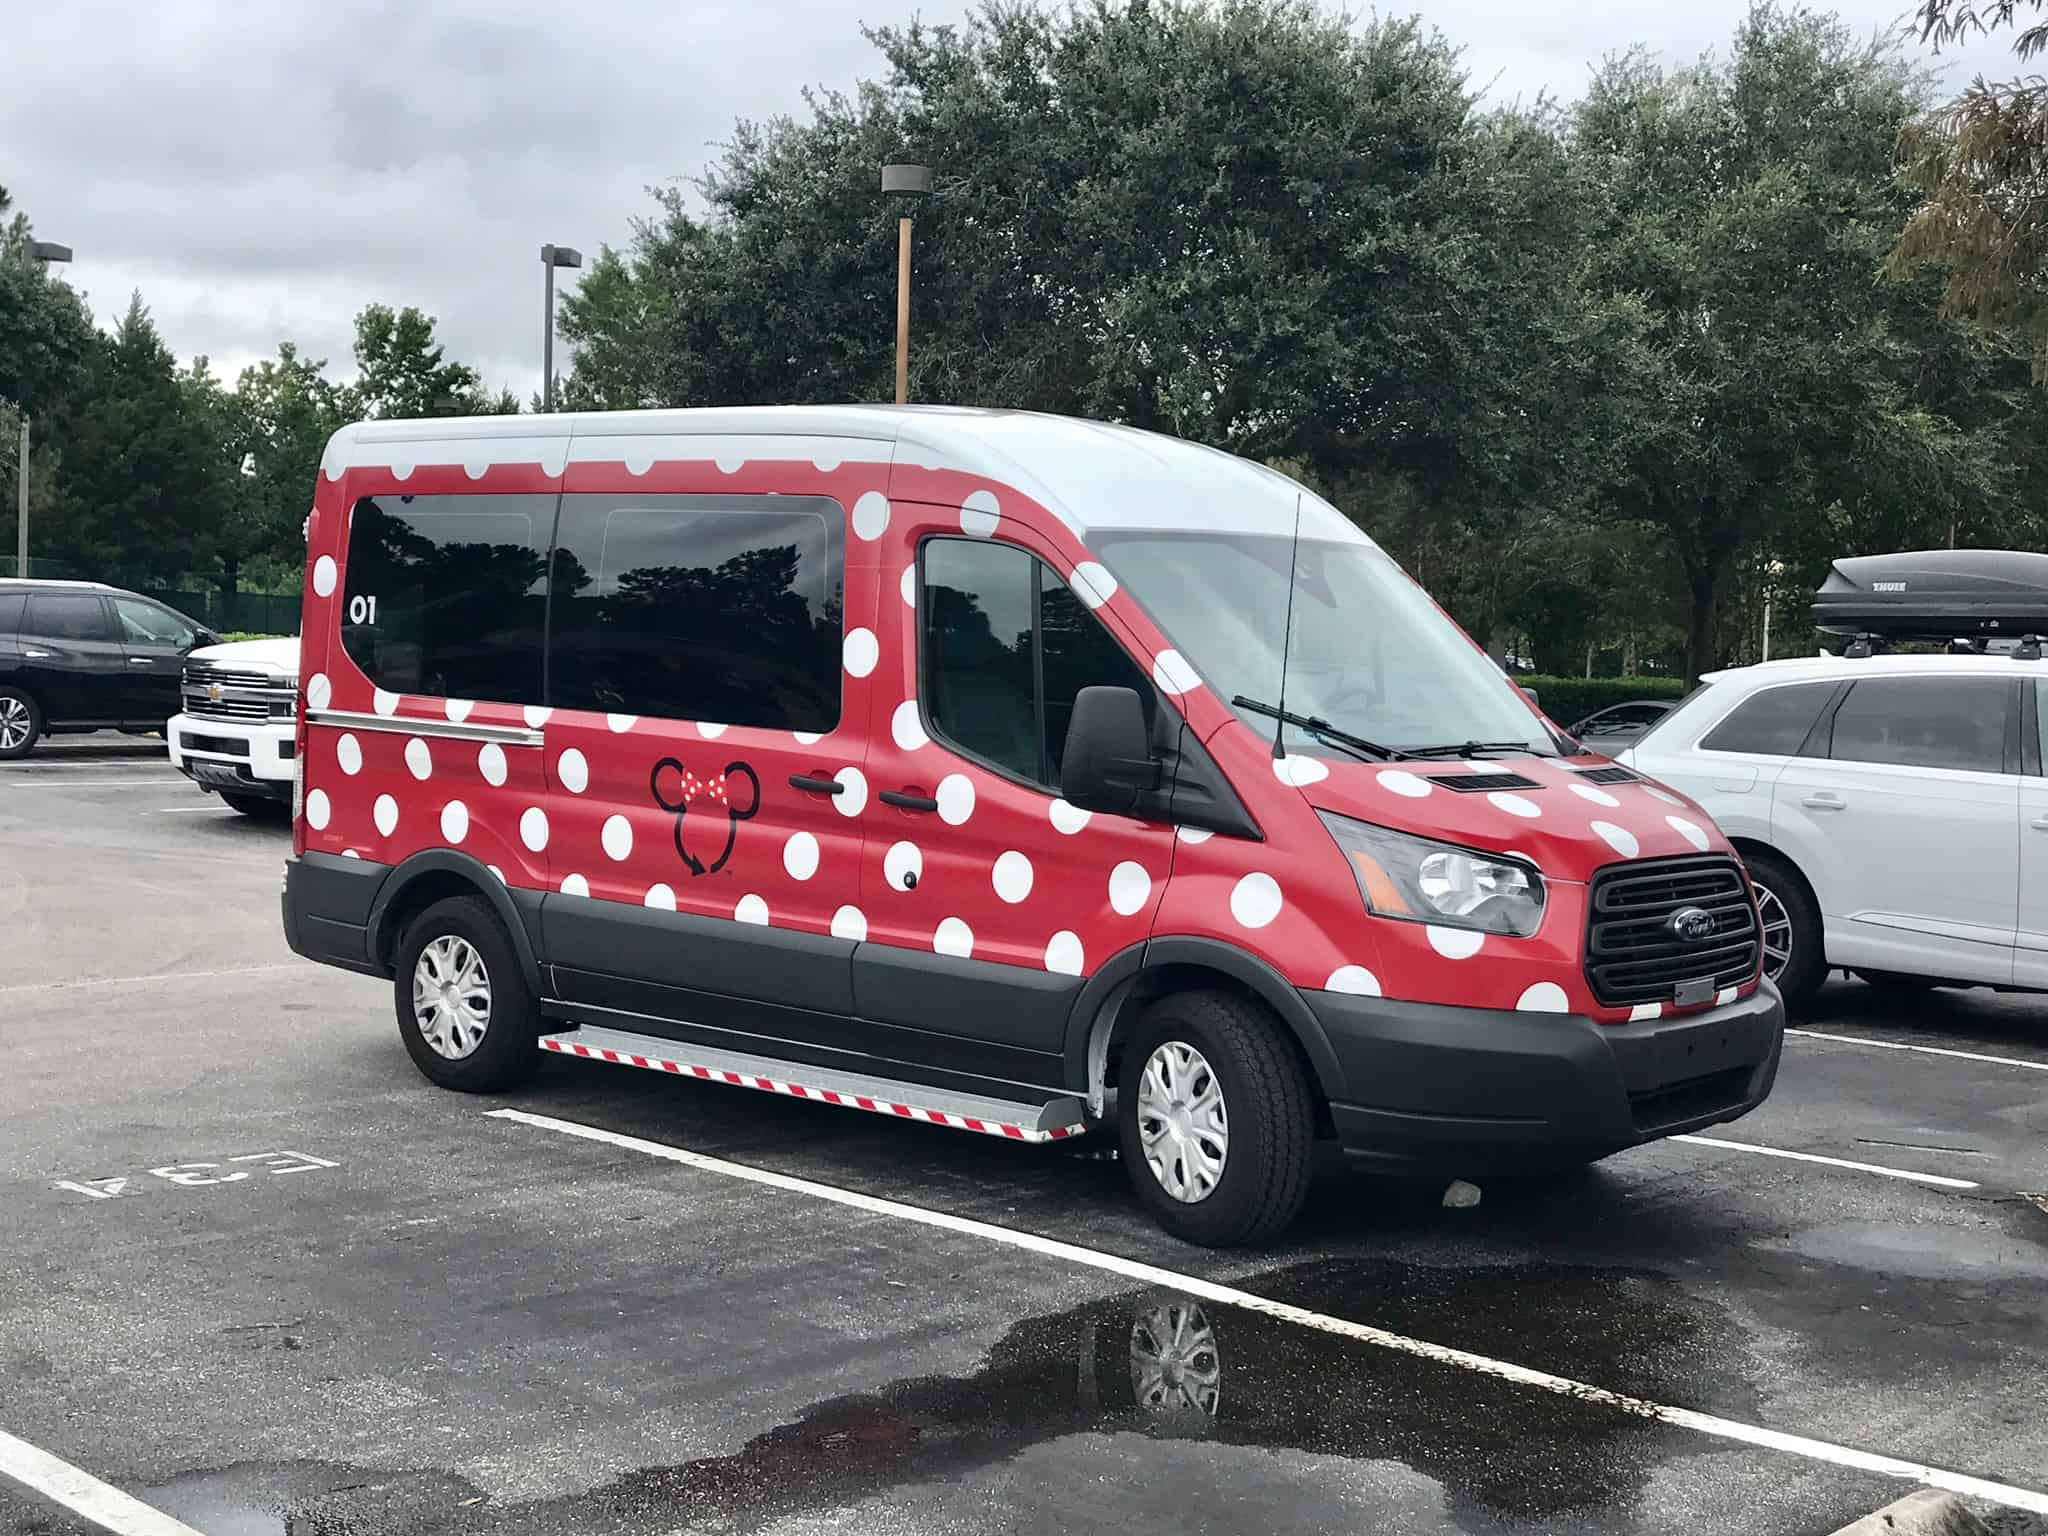 REVIEW: Minnie Vans Transportation Service Launches Through Lyft at Walt Disney World